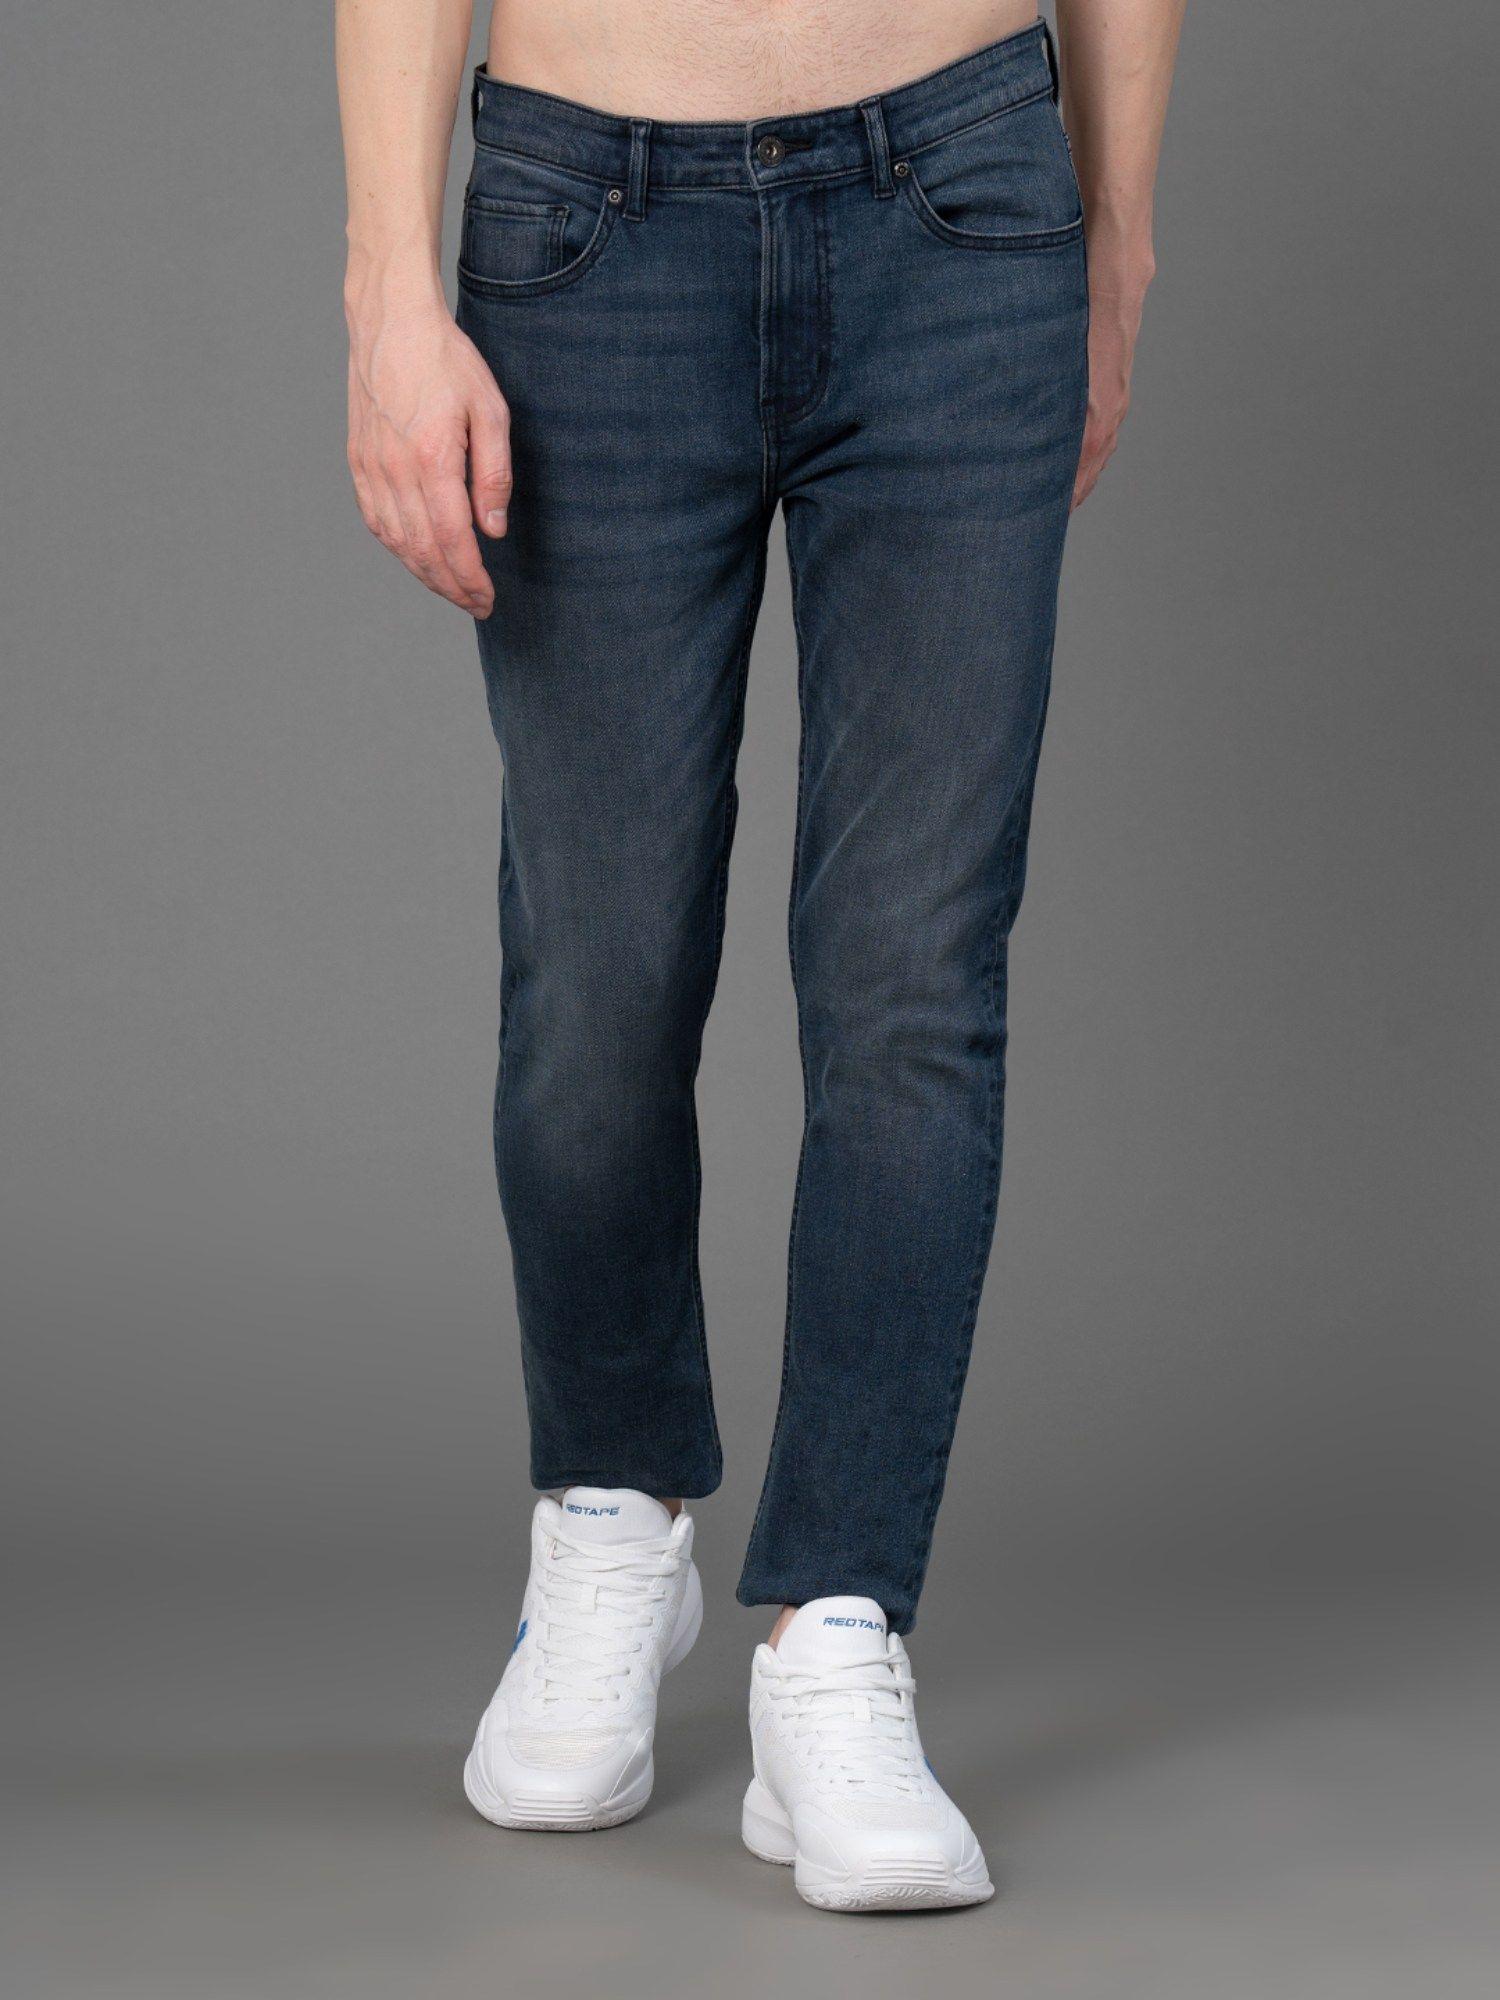 surf blue solid cotton spandex men's regular fit jeans